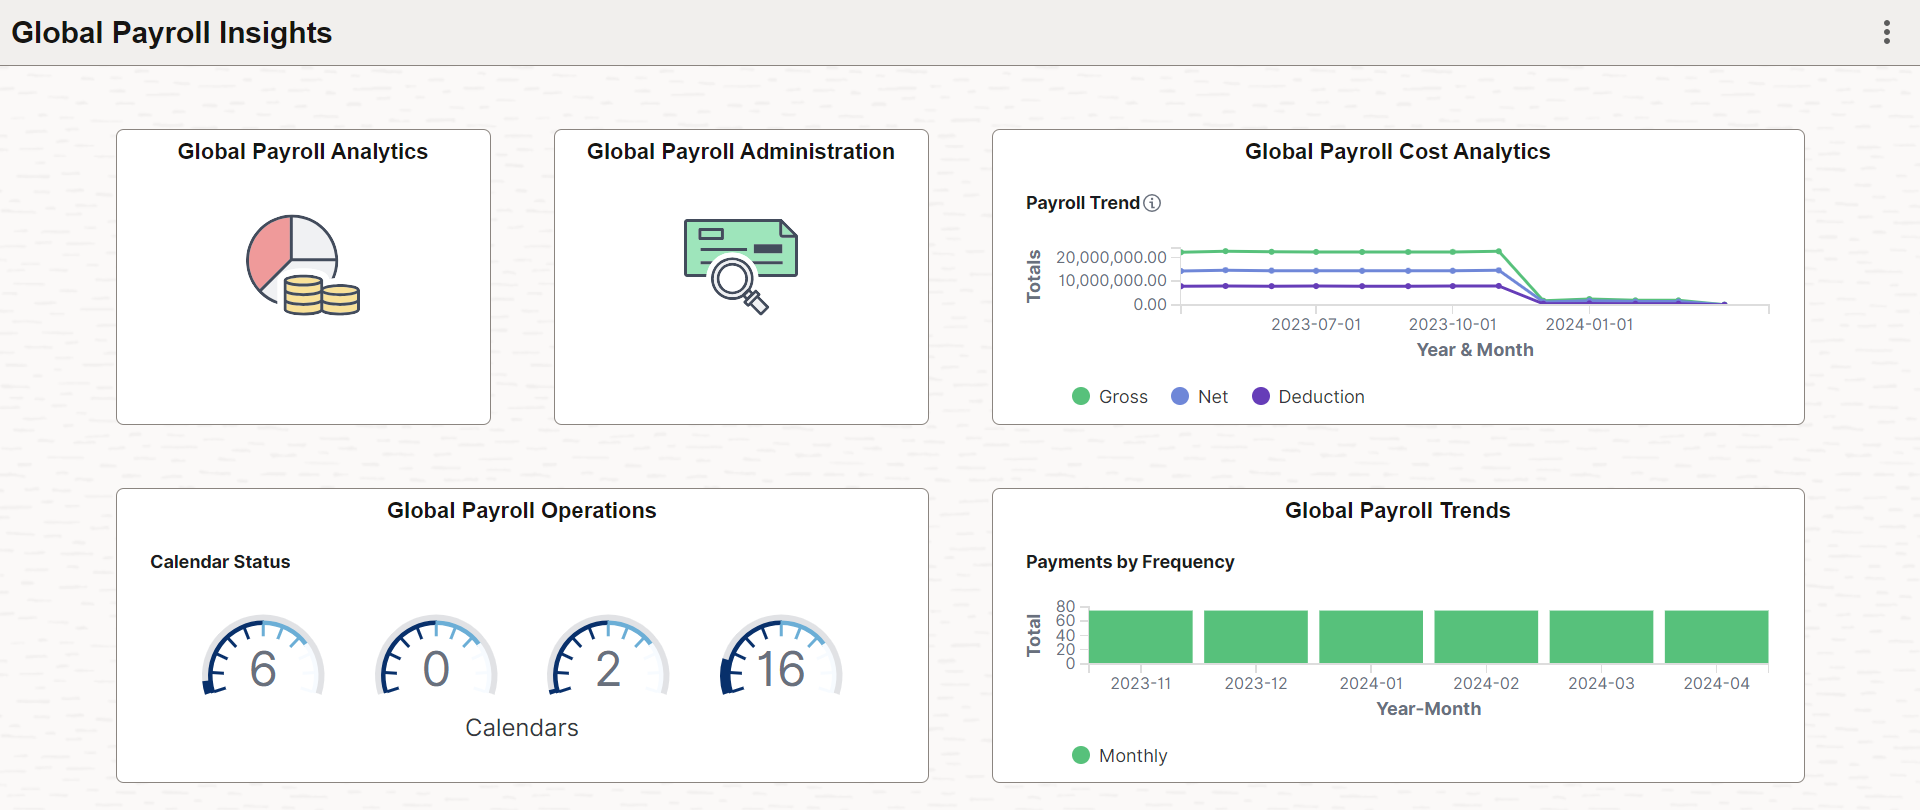 Global Payroll Insights dashboard